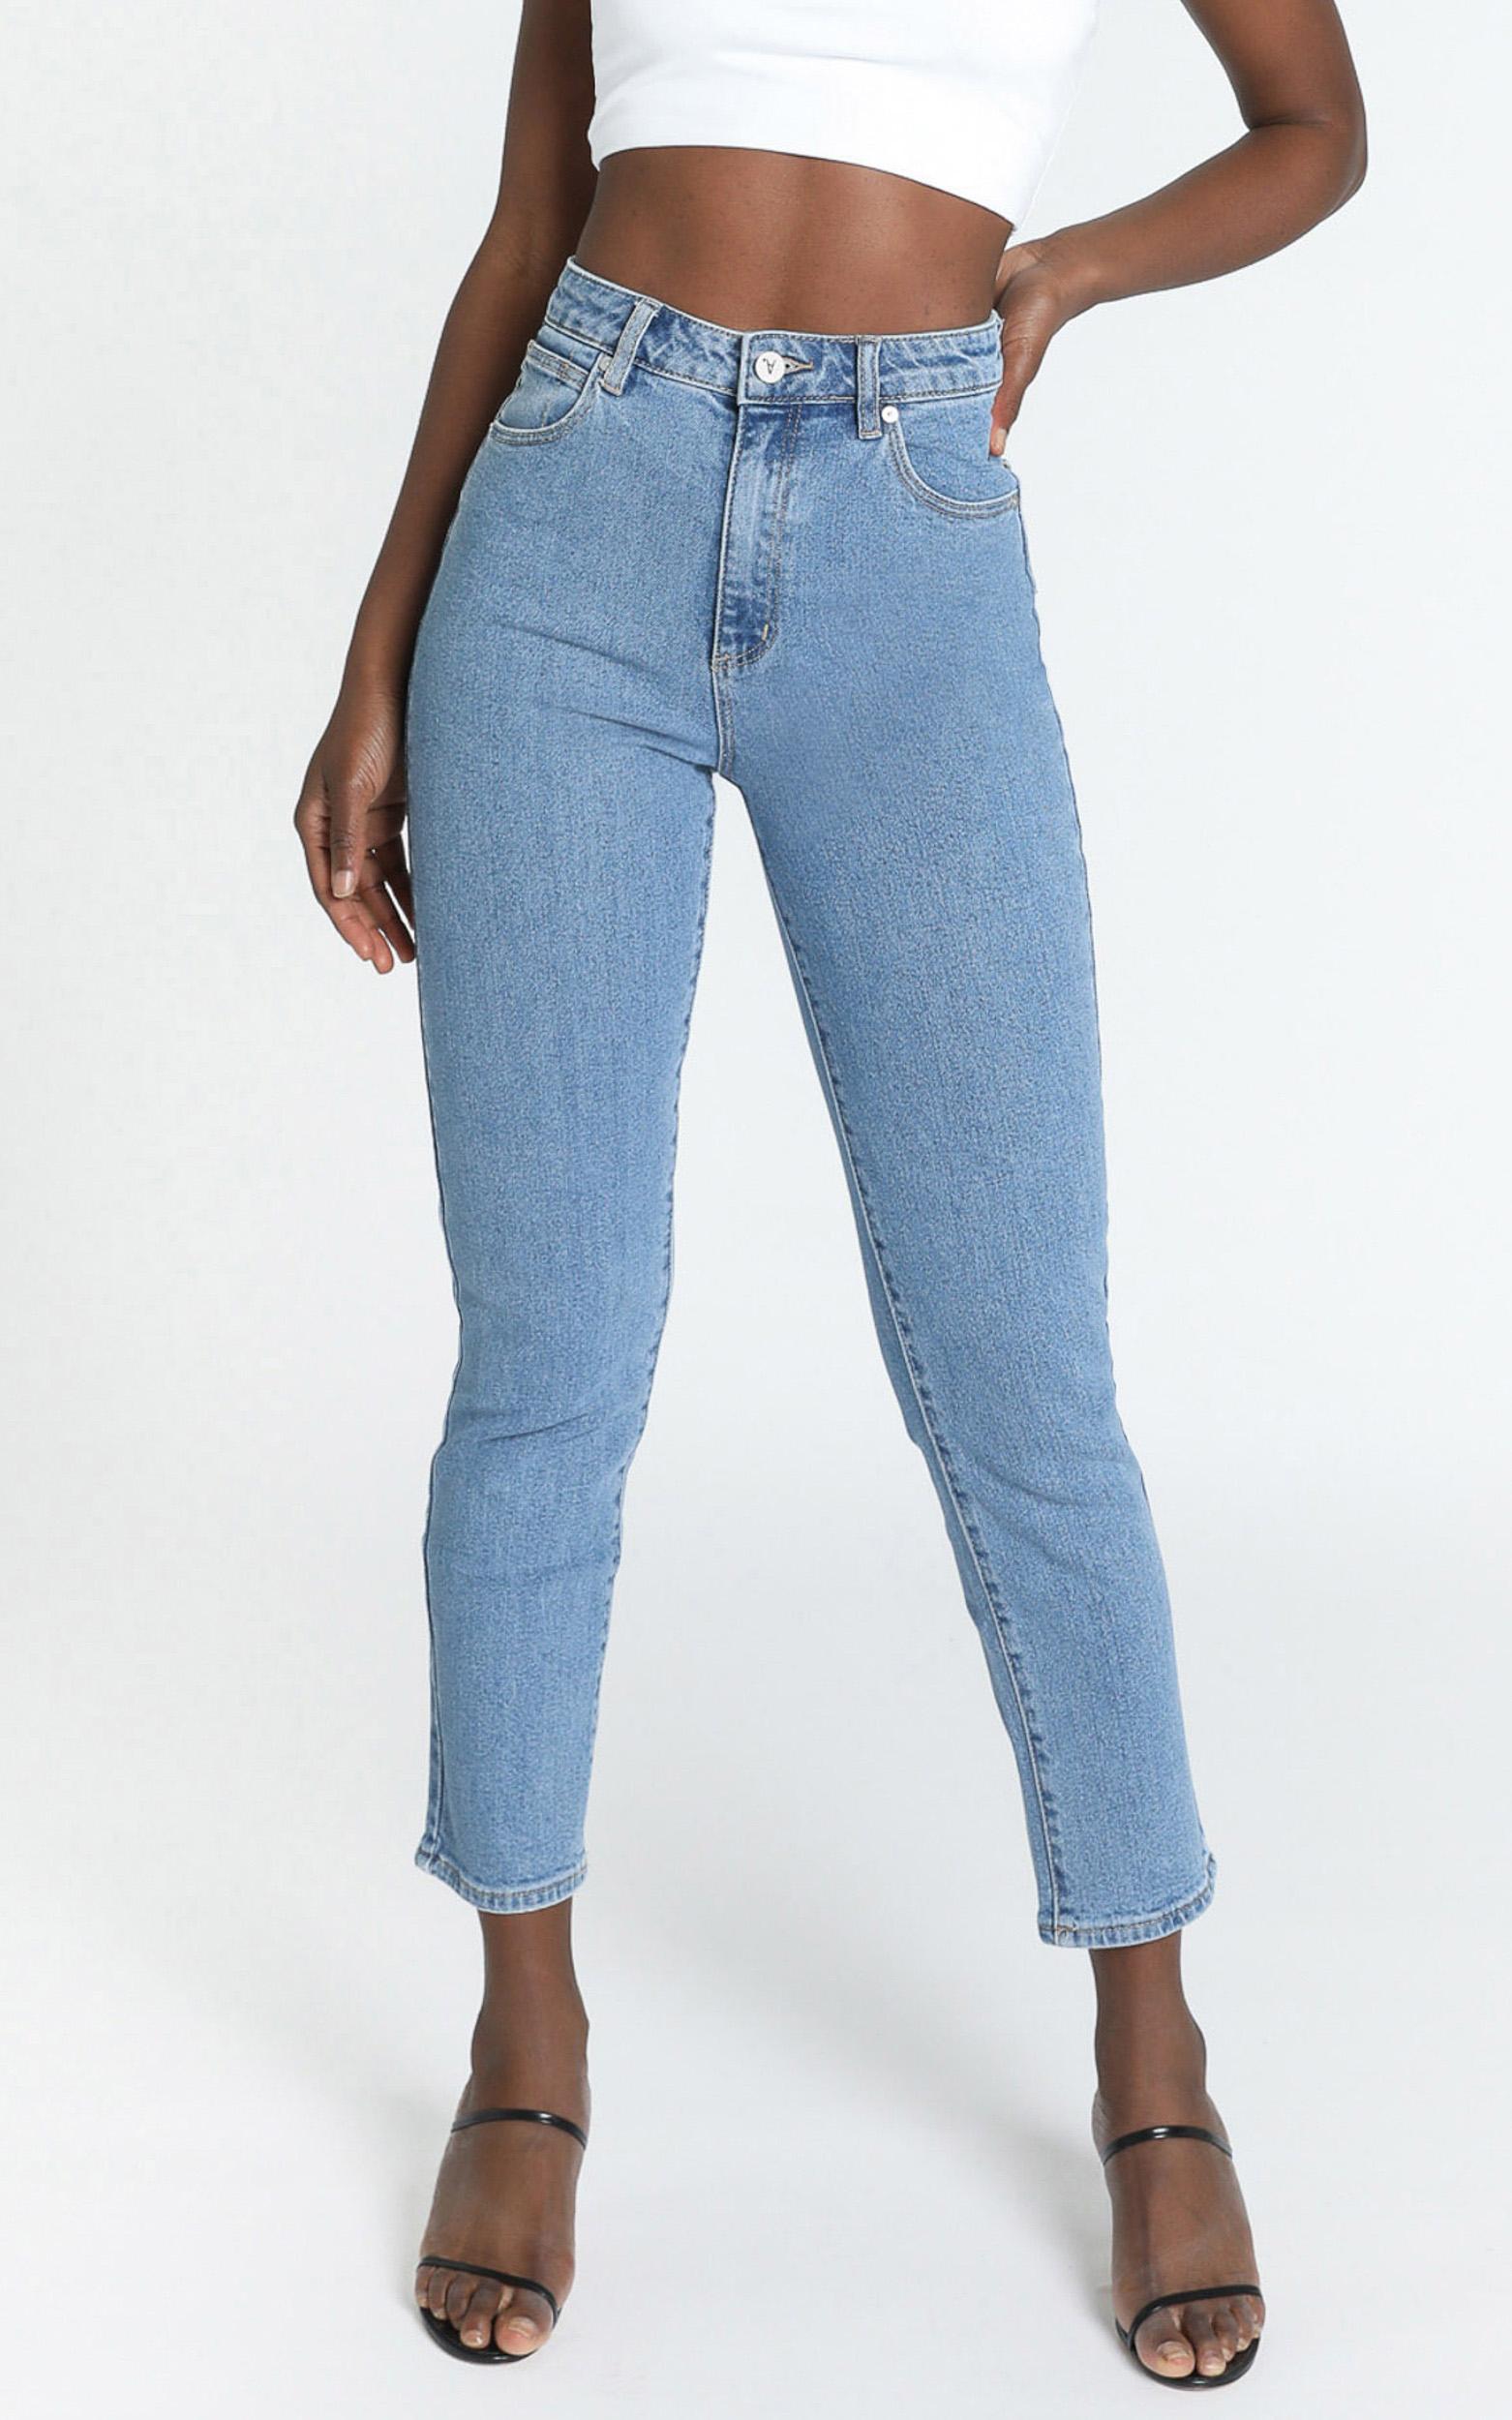 Abrand - A '94 High Slim Jeans in Georgia | Showpo